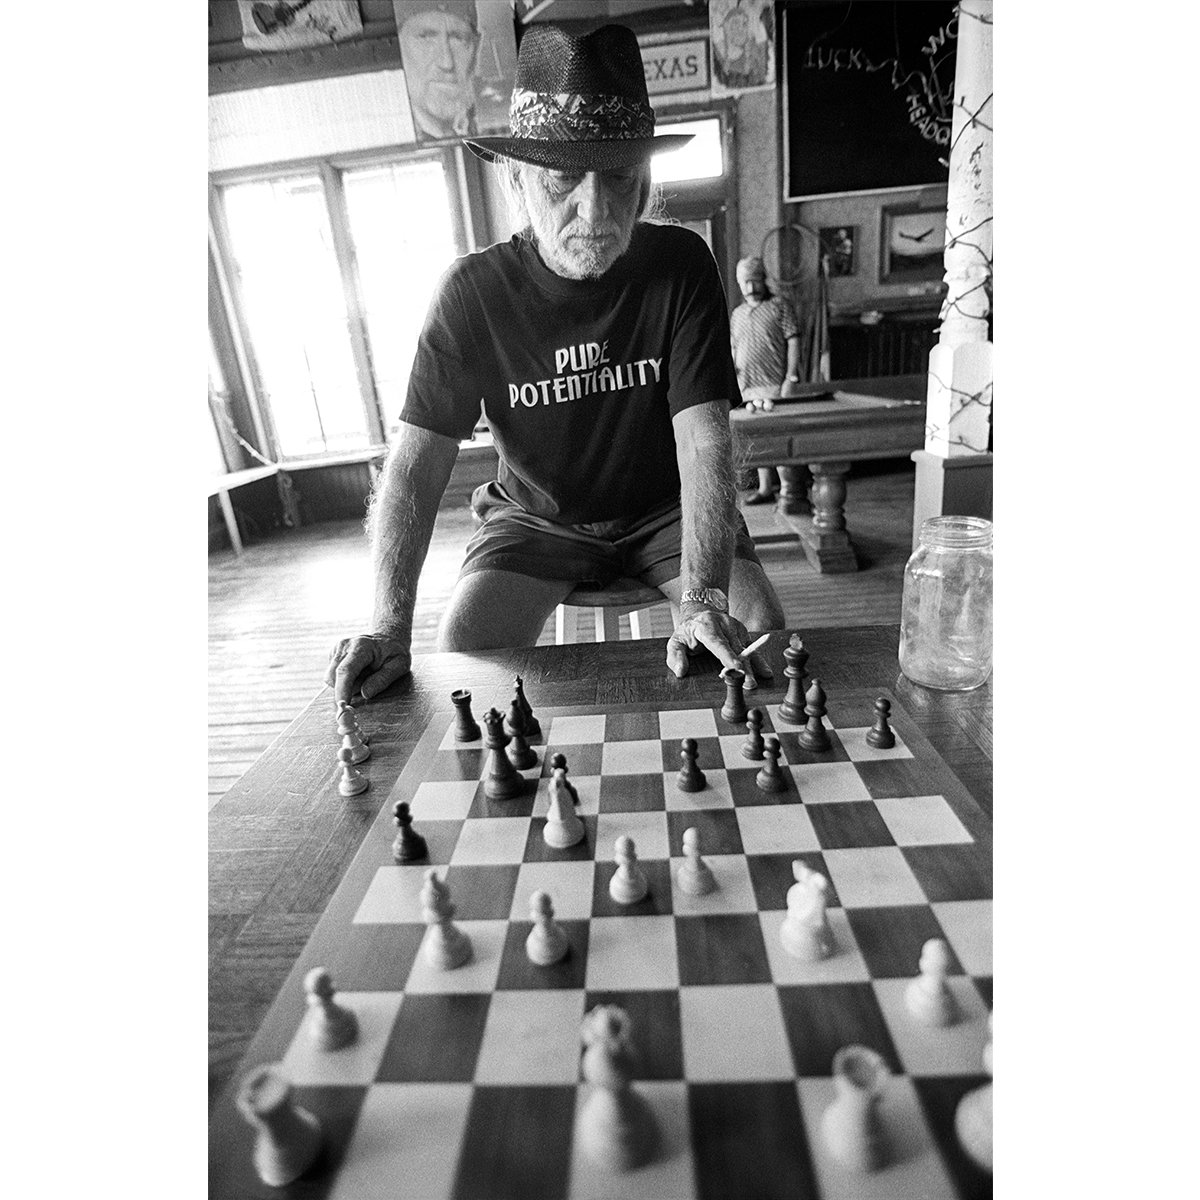 Willie playing chess by Scott Newton